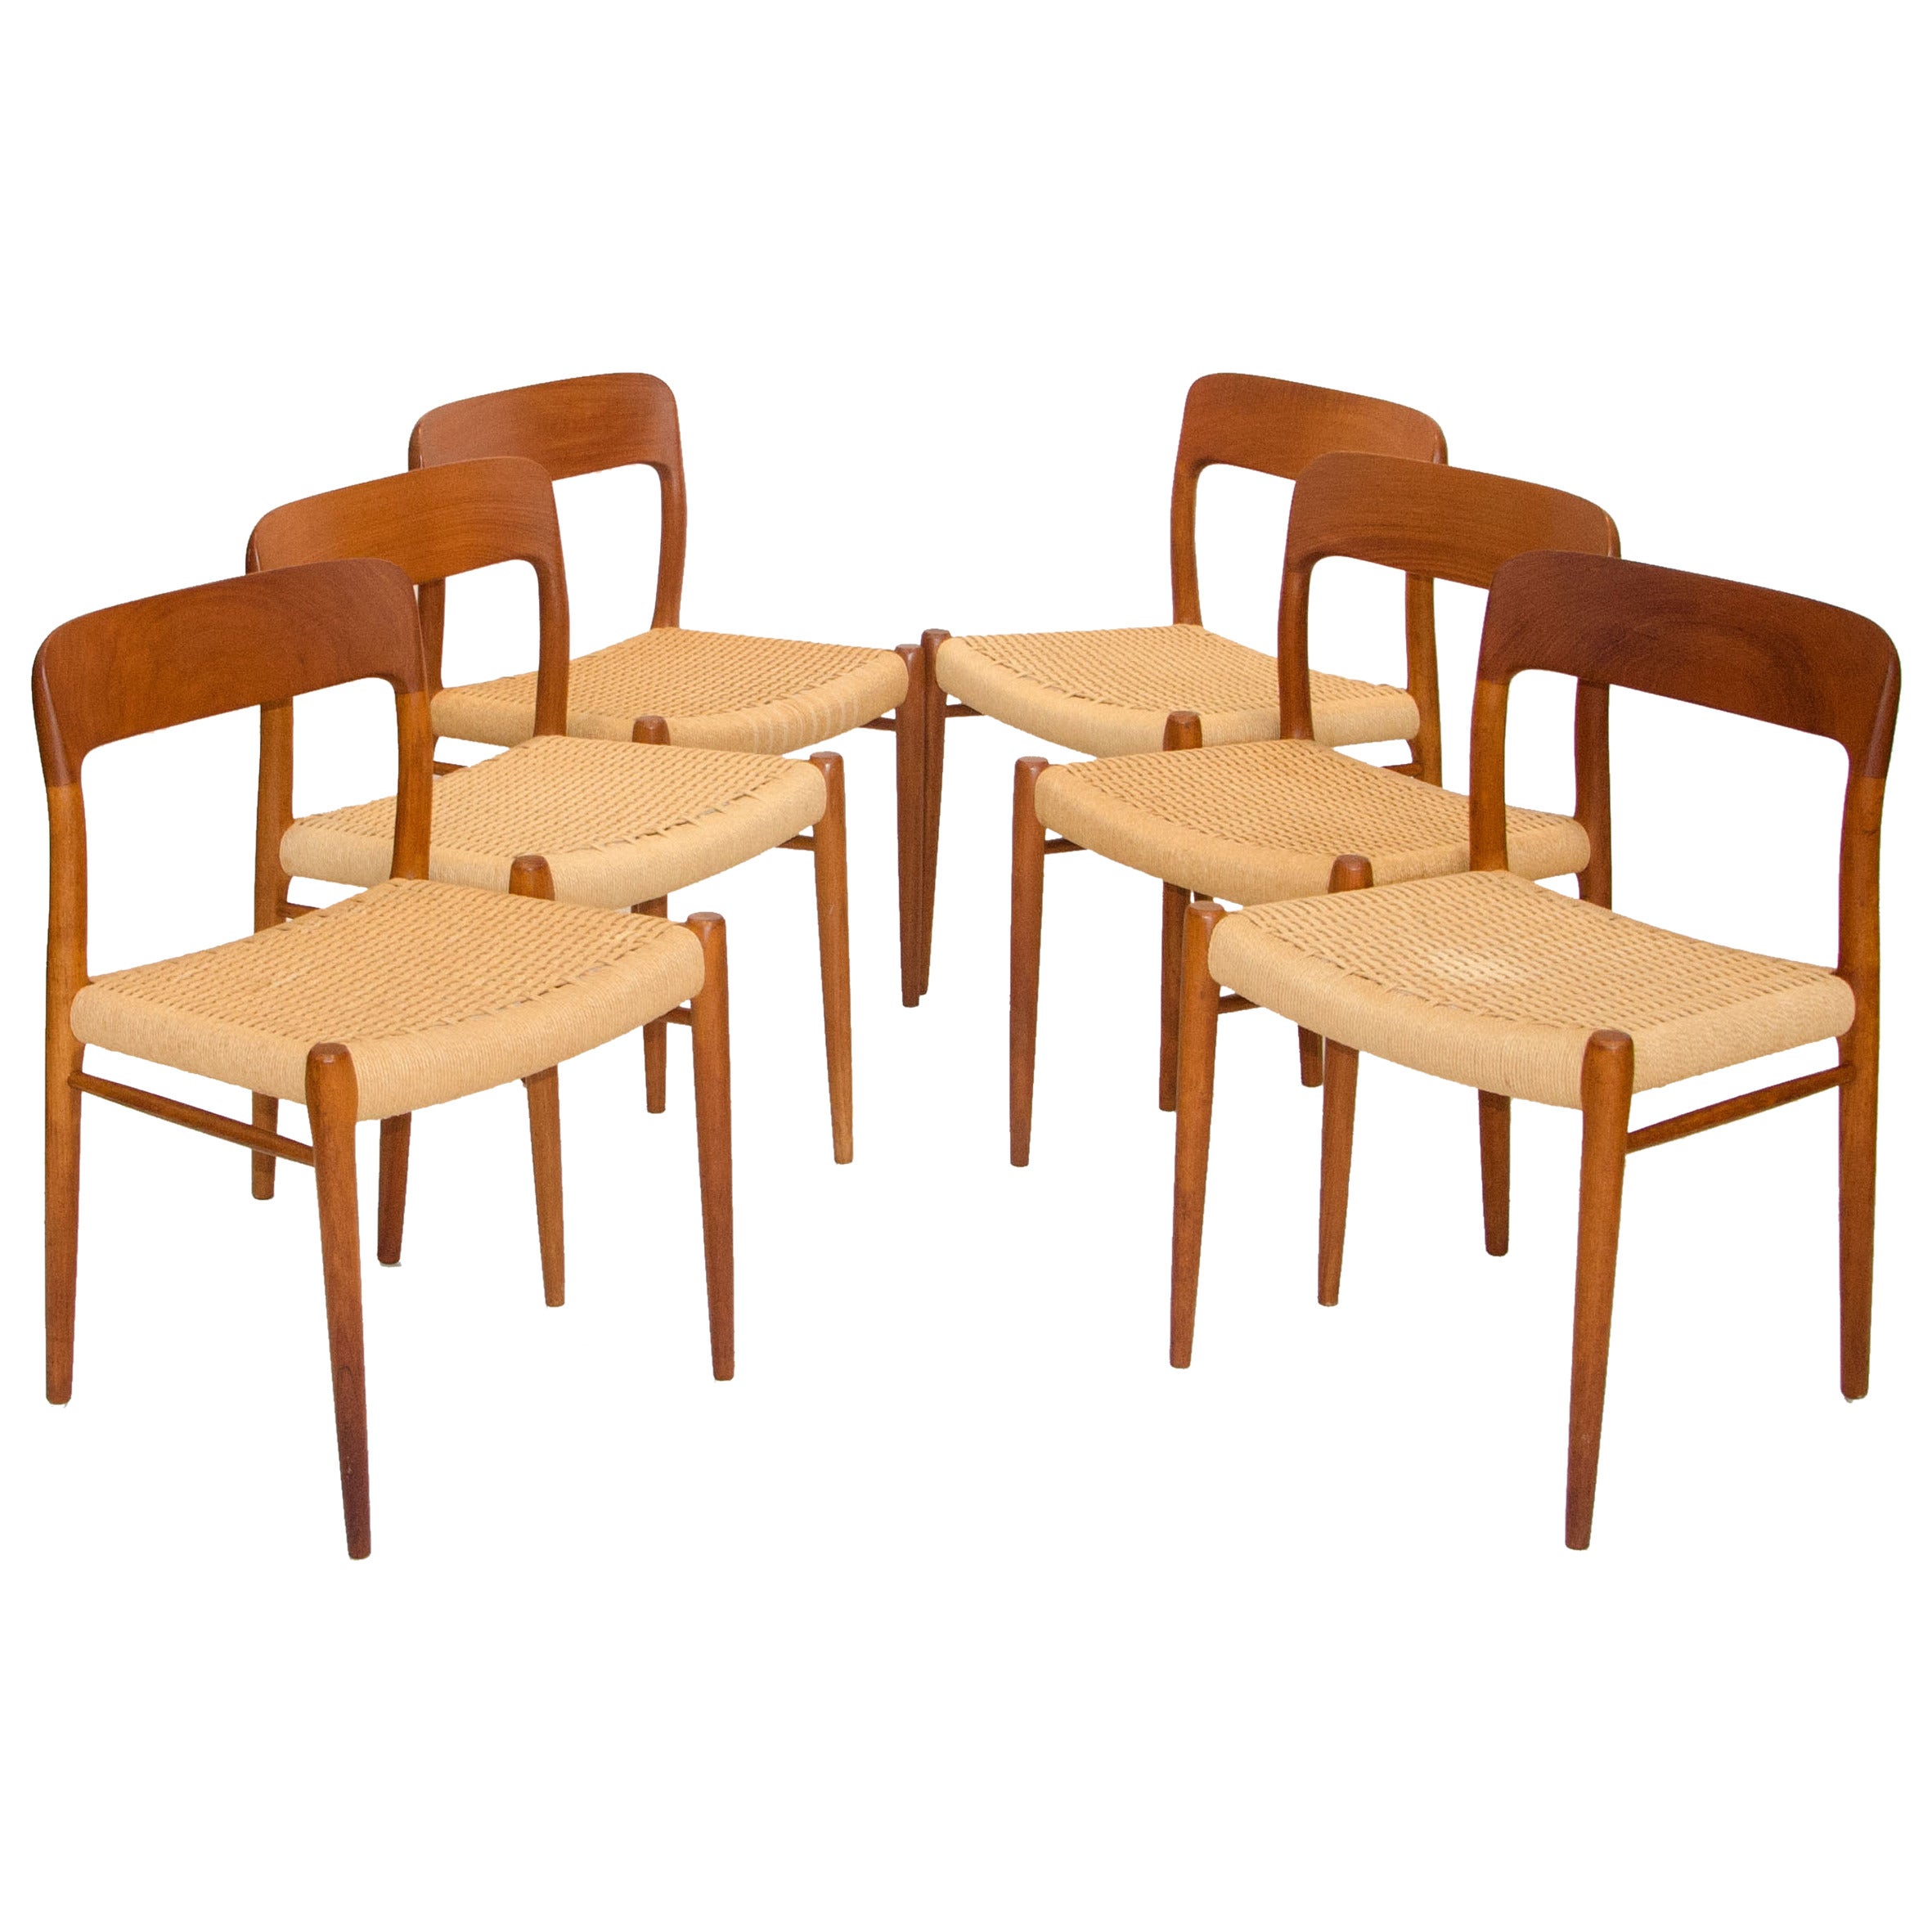 Four Danish Teak Dining Chairs, Niels Moller #75